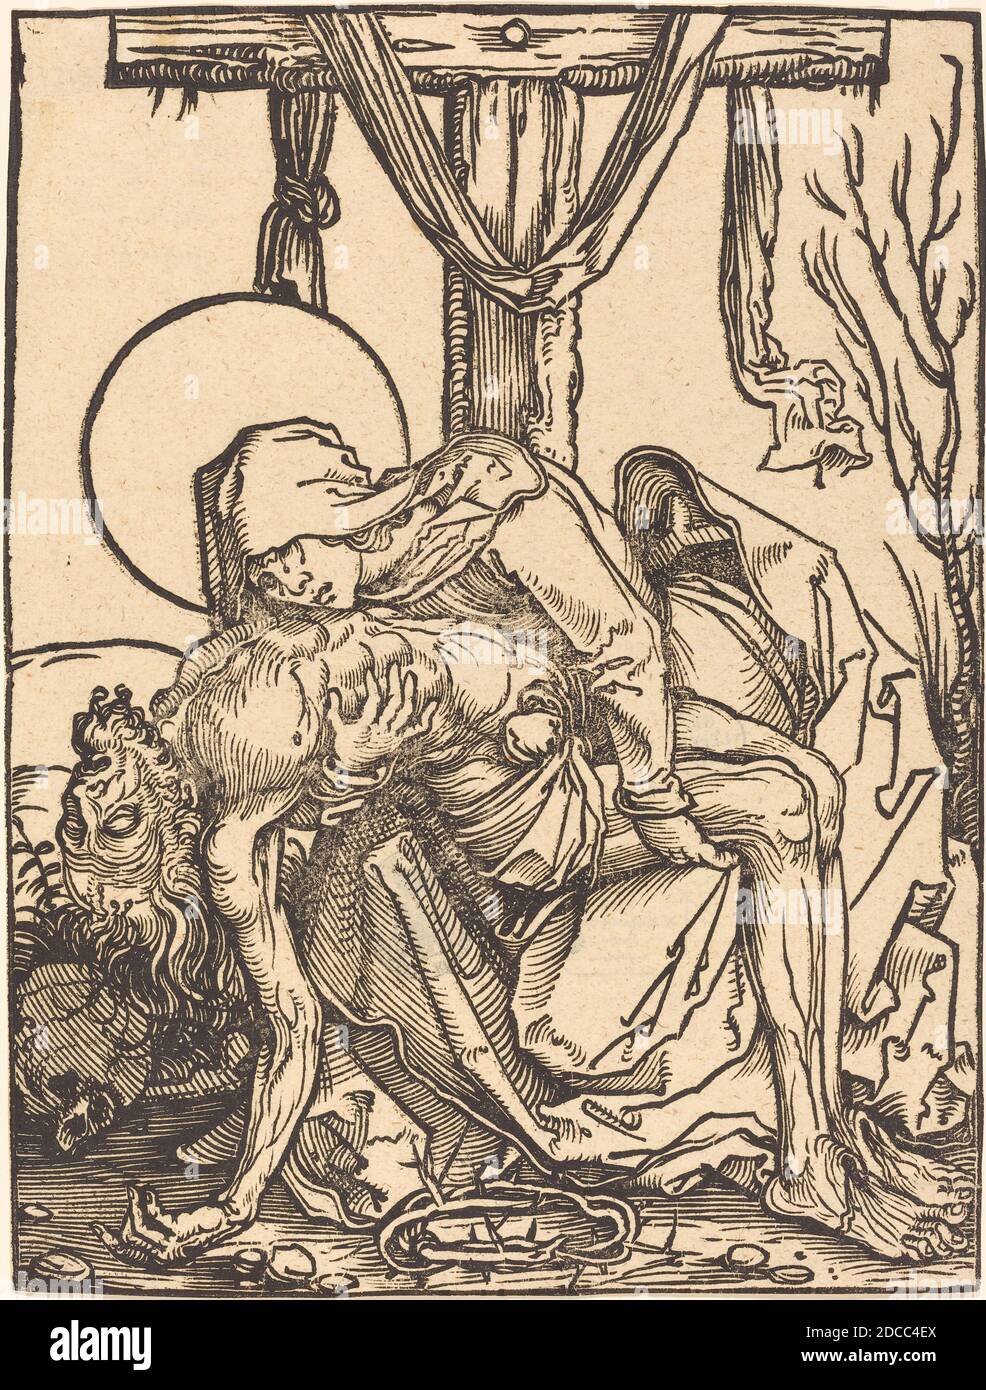 Hans Weiditz, II, (artist), German, 1500 or before - c. 1536, Pietà, woodcut Stock Photo